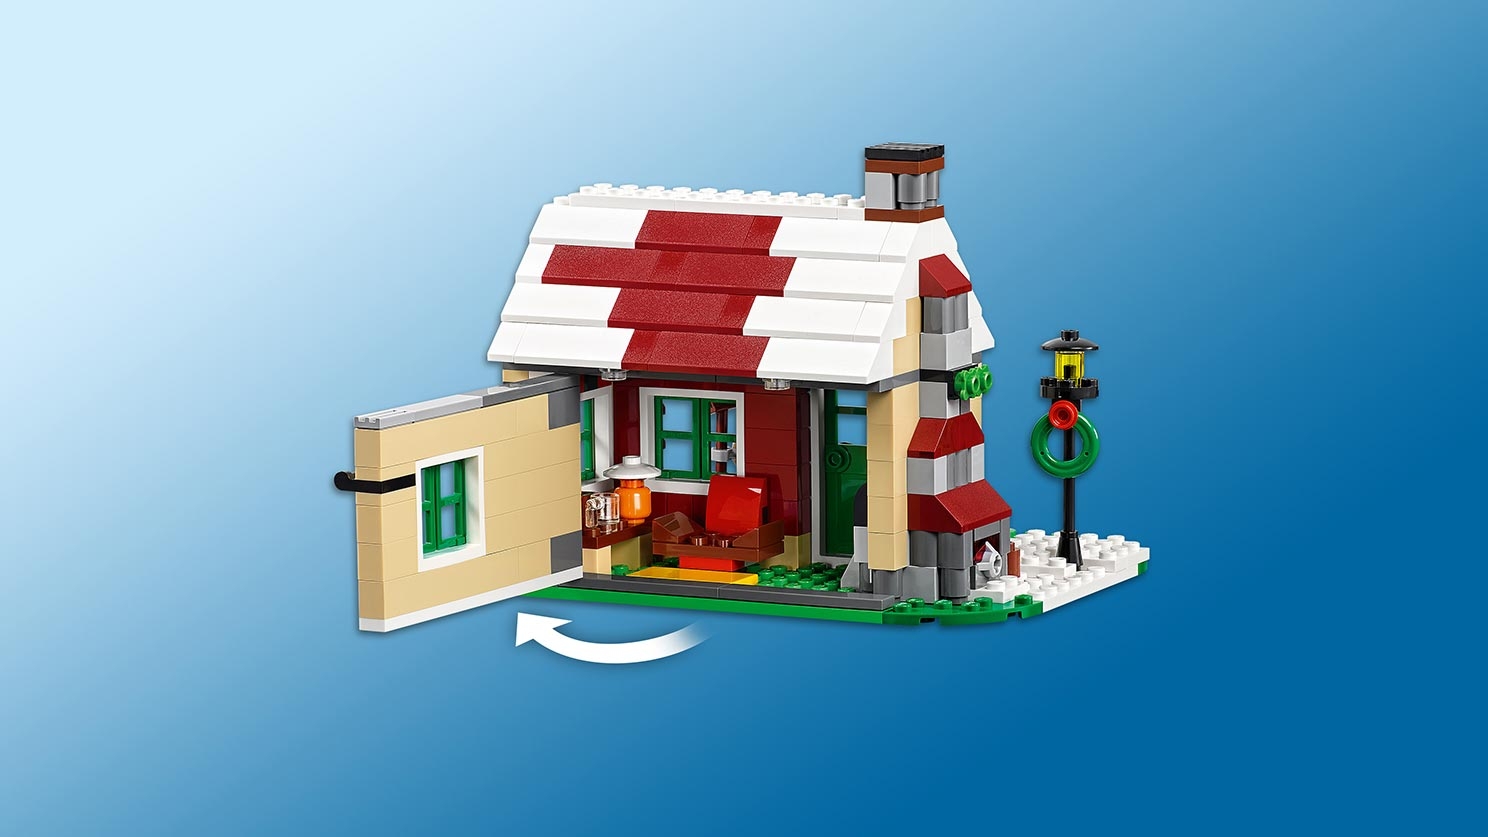 Changing Seasons - Videos - LEGO.com for kids